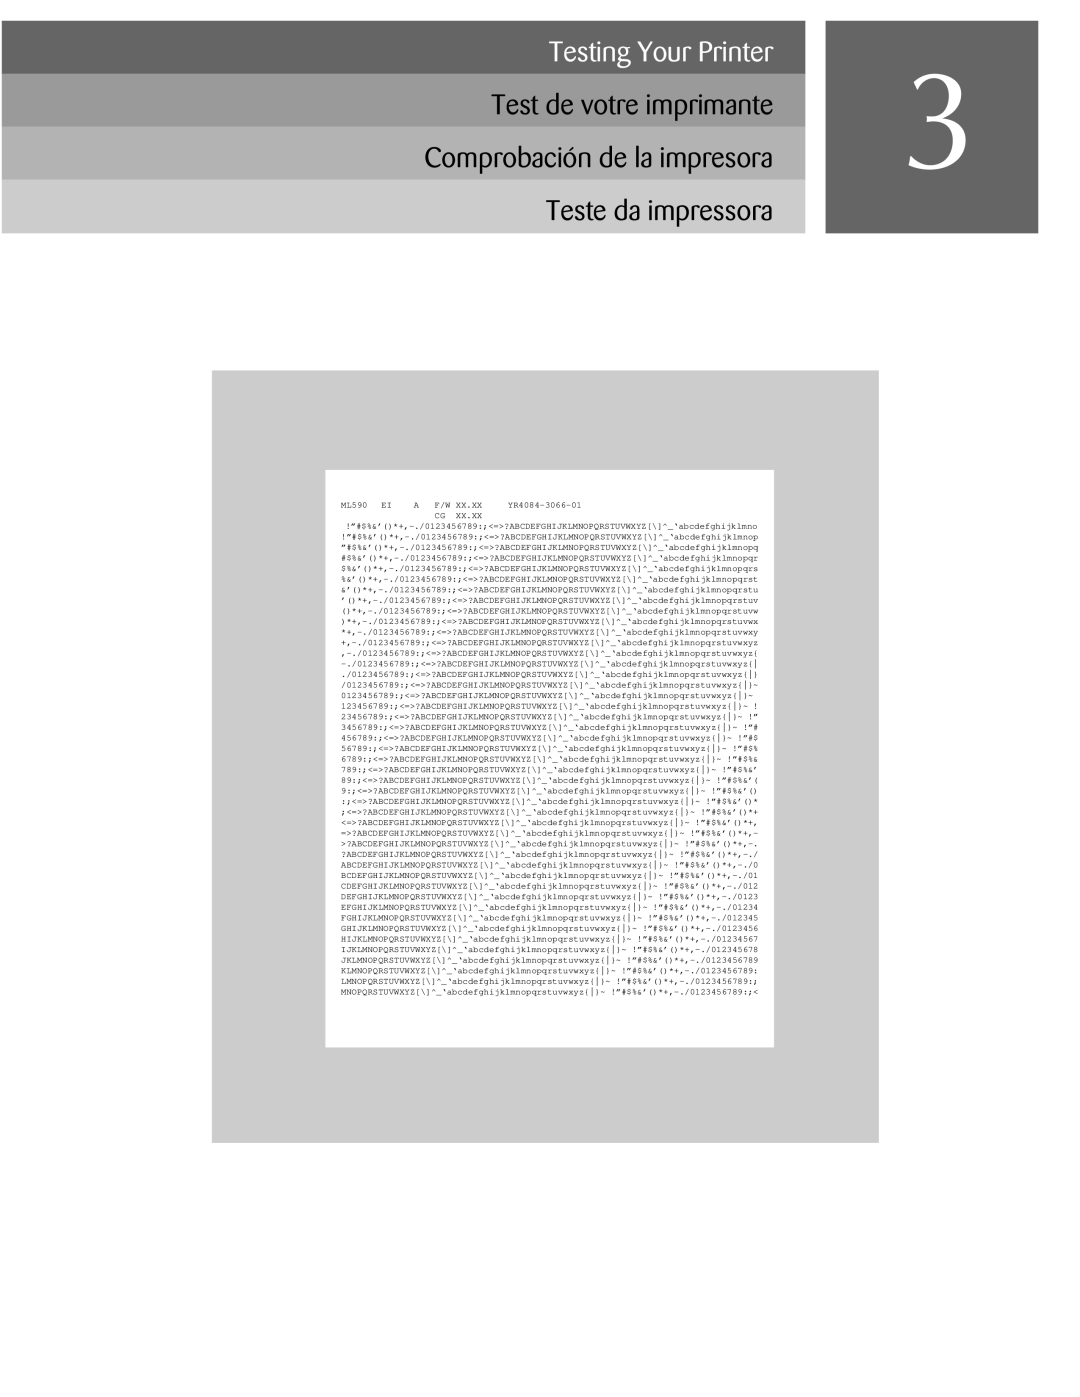 Oki manual Comprobación de la impresora Teste da impressora, ML590 EI, A F/W, YR4084-3066-01 